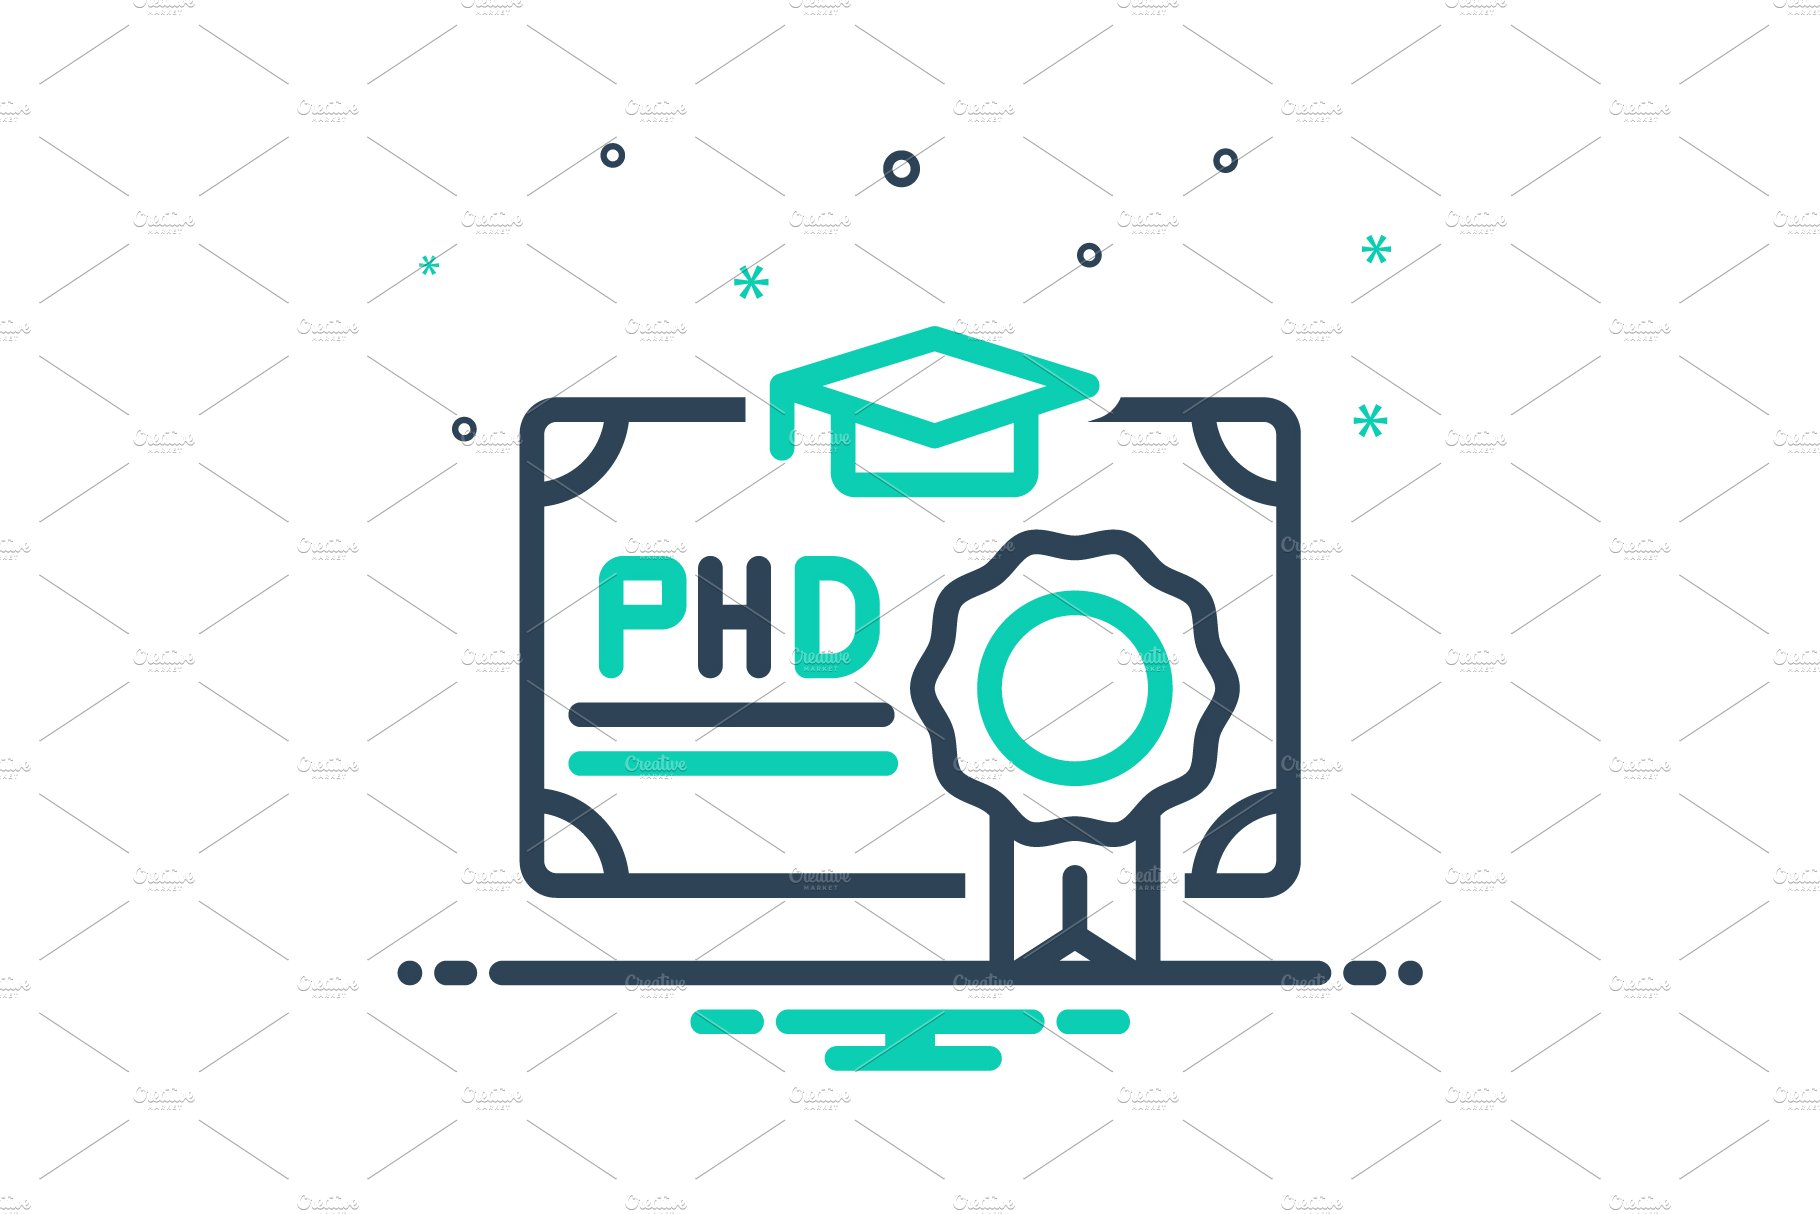 Phd graduate mix icon cover image.